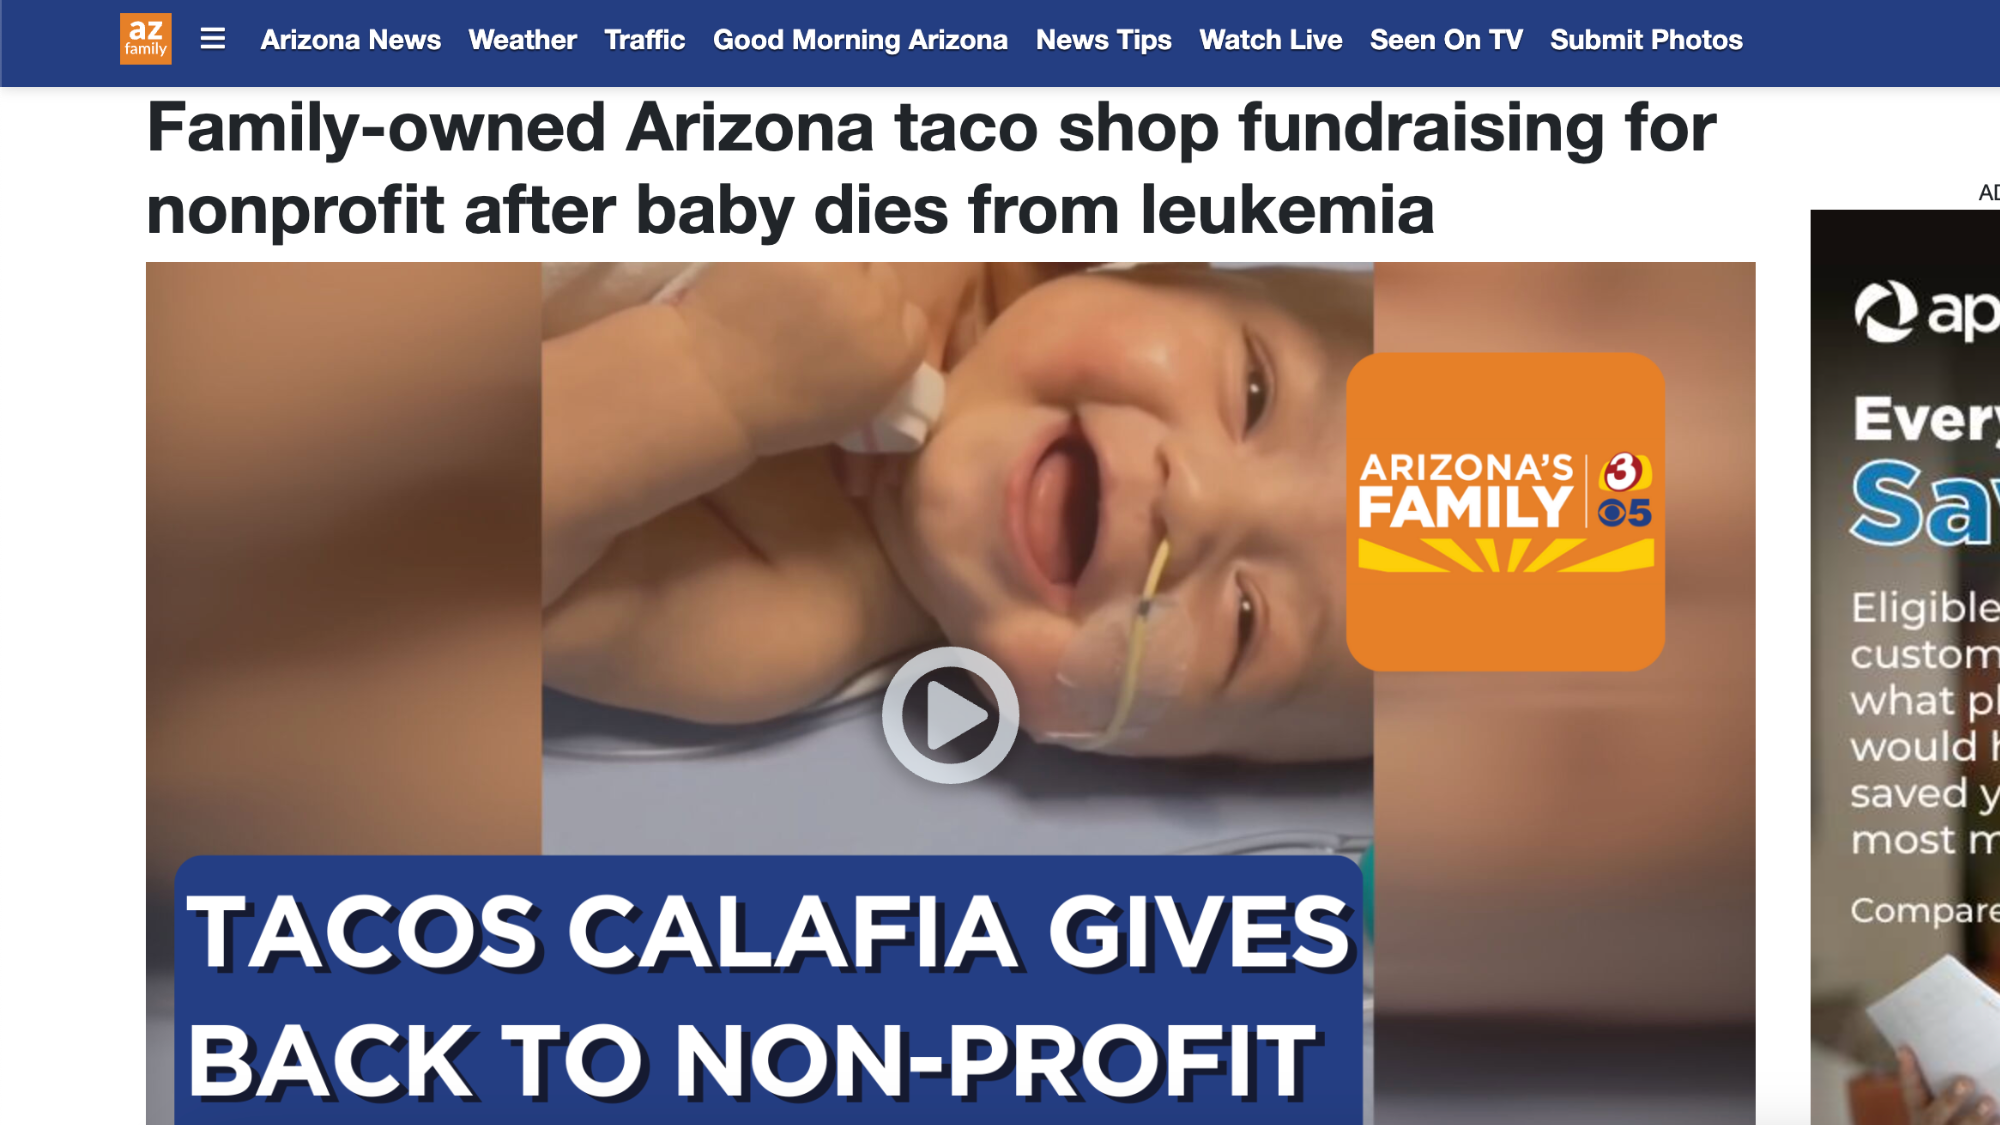 Arizona Family: "Family-owned Arizona taco shop fundraising for nonprofit after baby dies from leukemia"